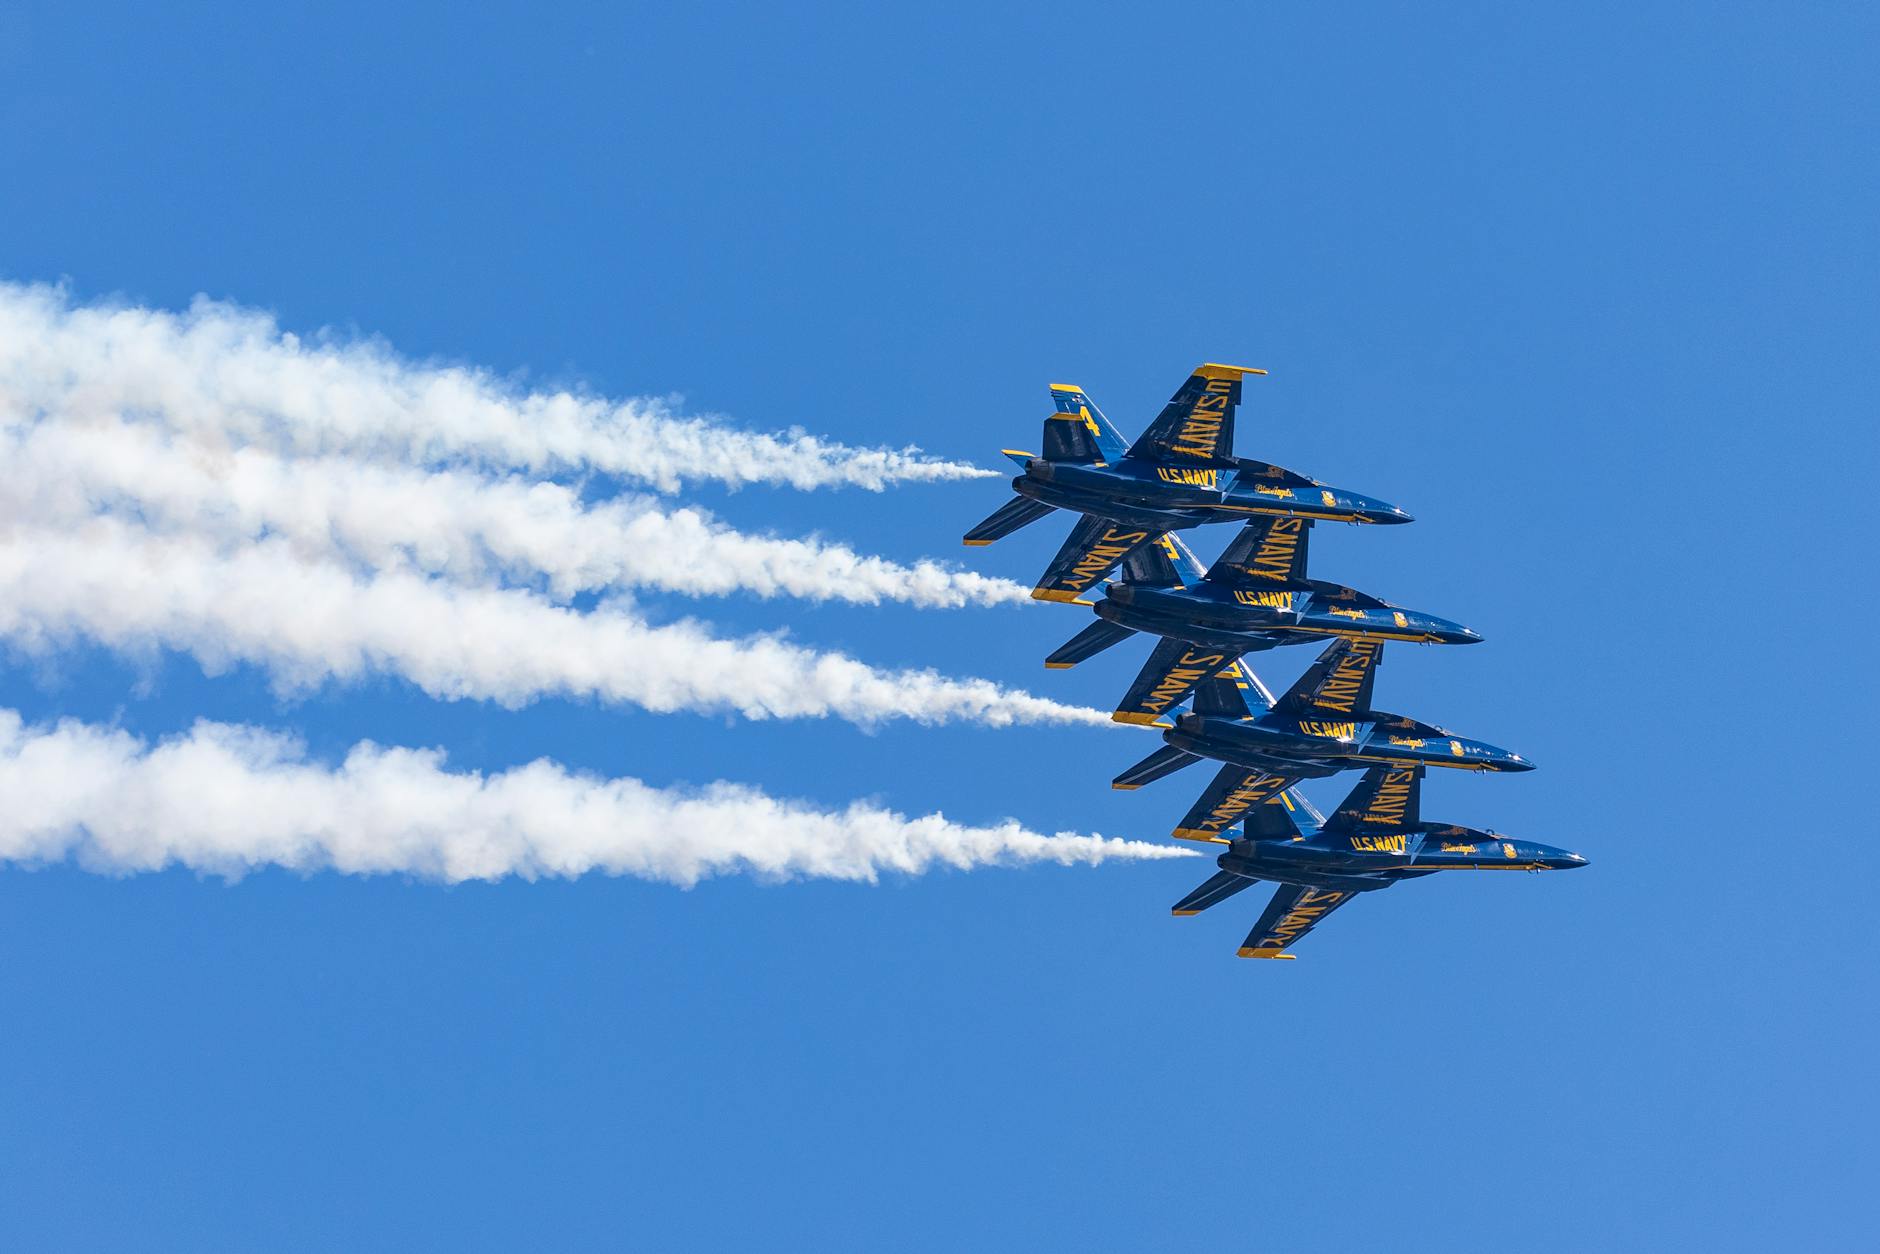 blue angels doing a flight demonstration